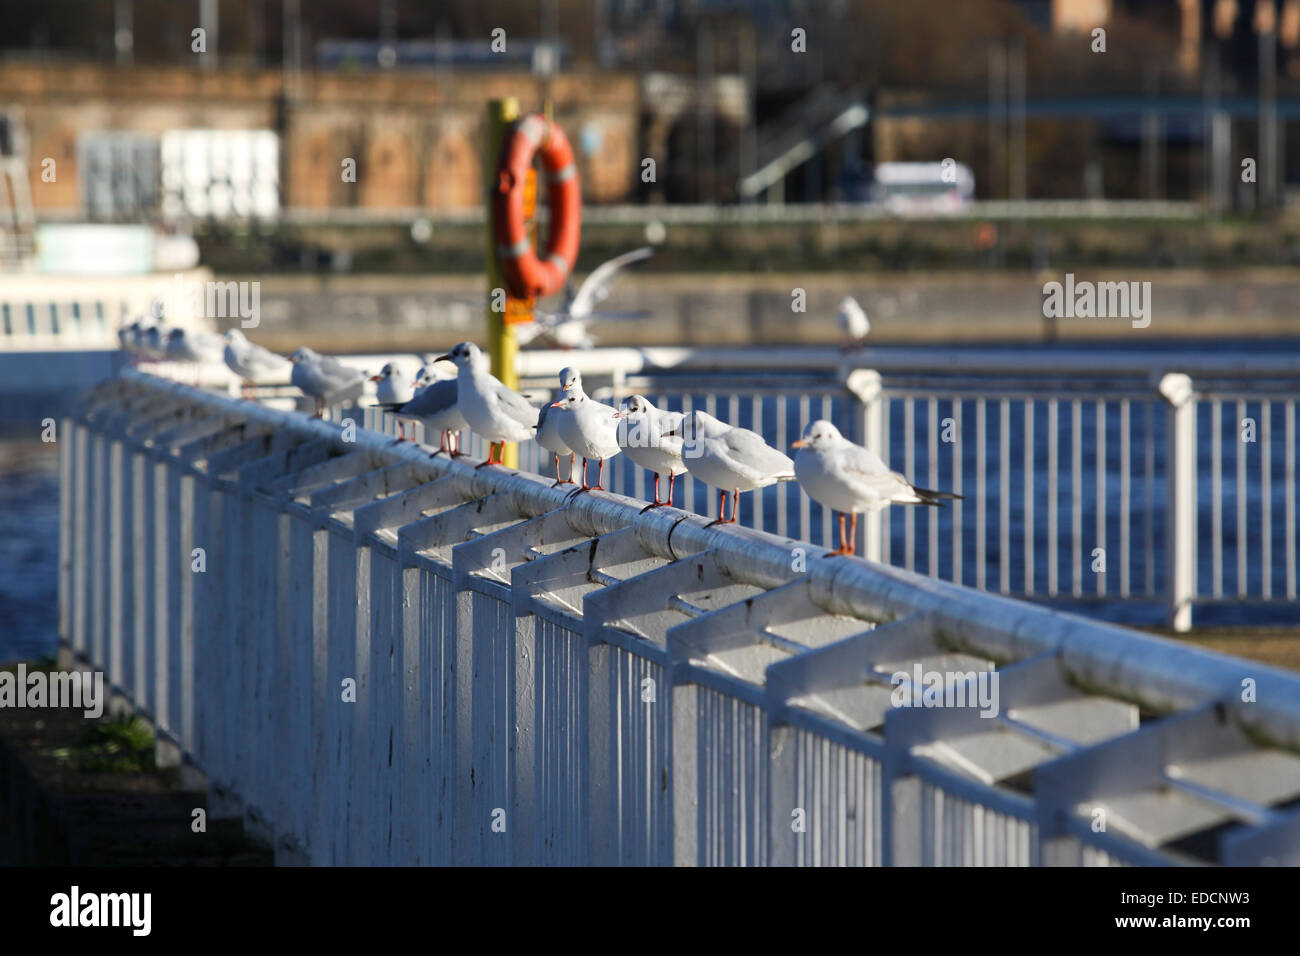 Seagulls perched on riverside railing Stock Photo